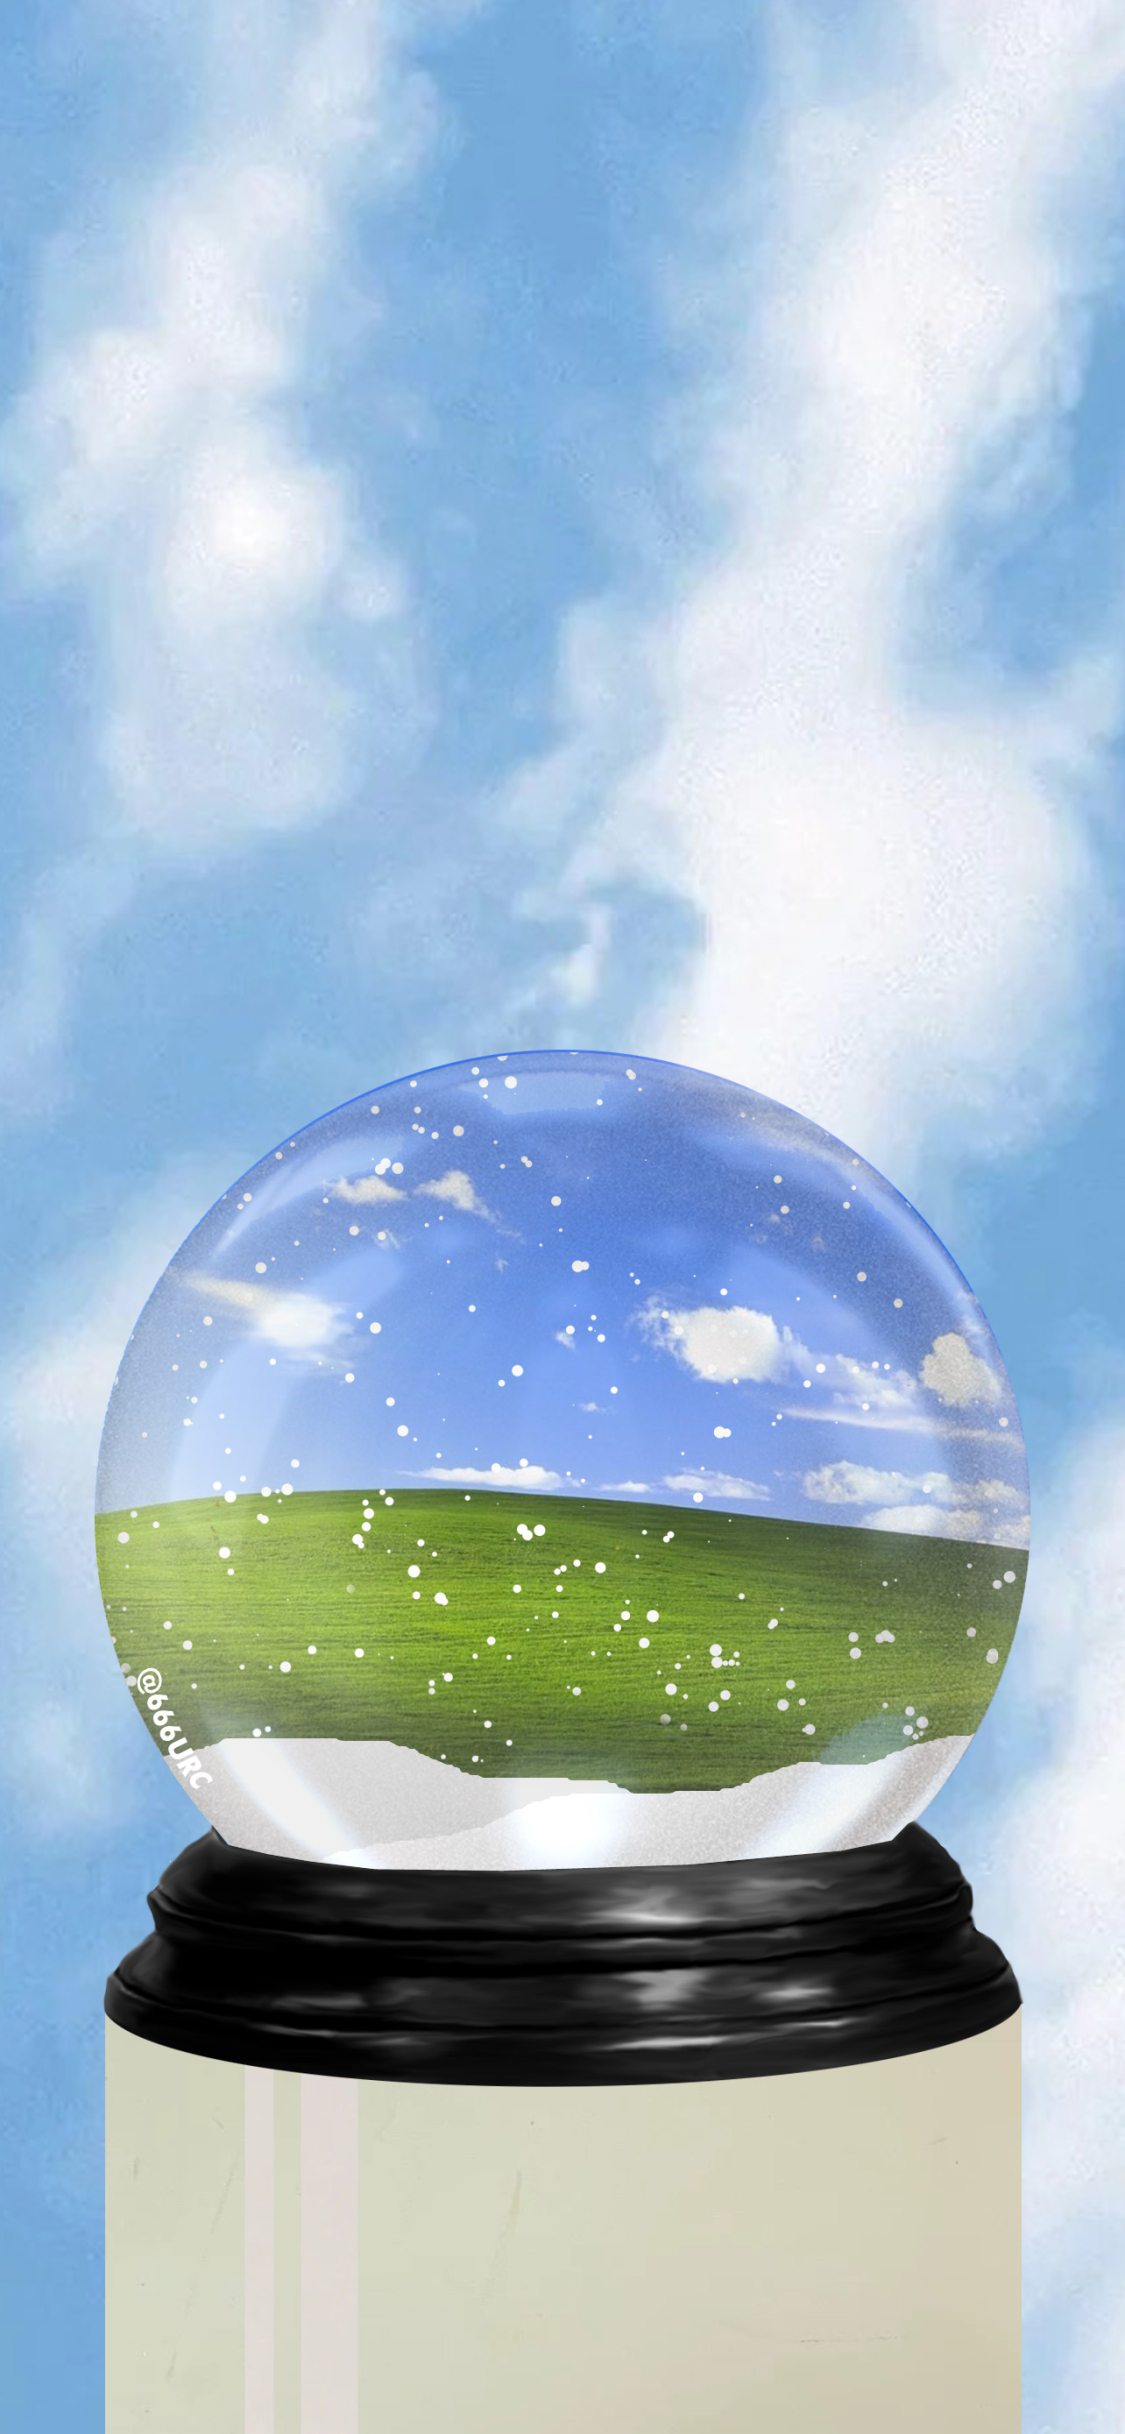 phone wallpaper displaying snow globe // windows (backgrounds)